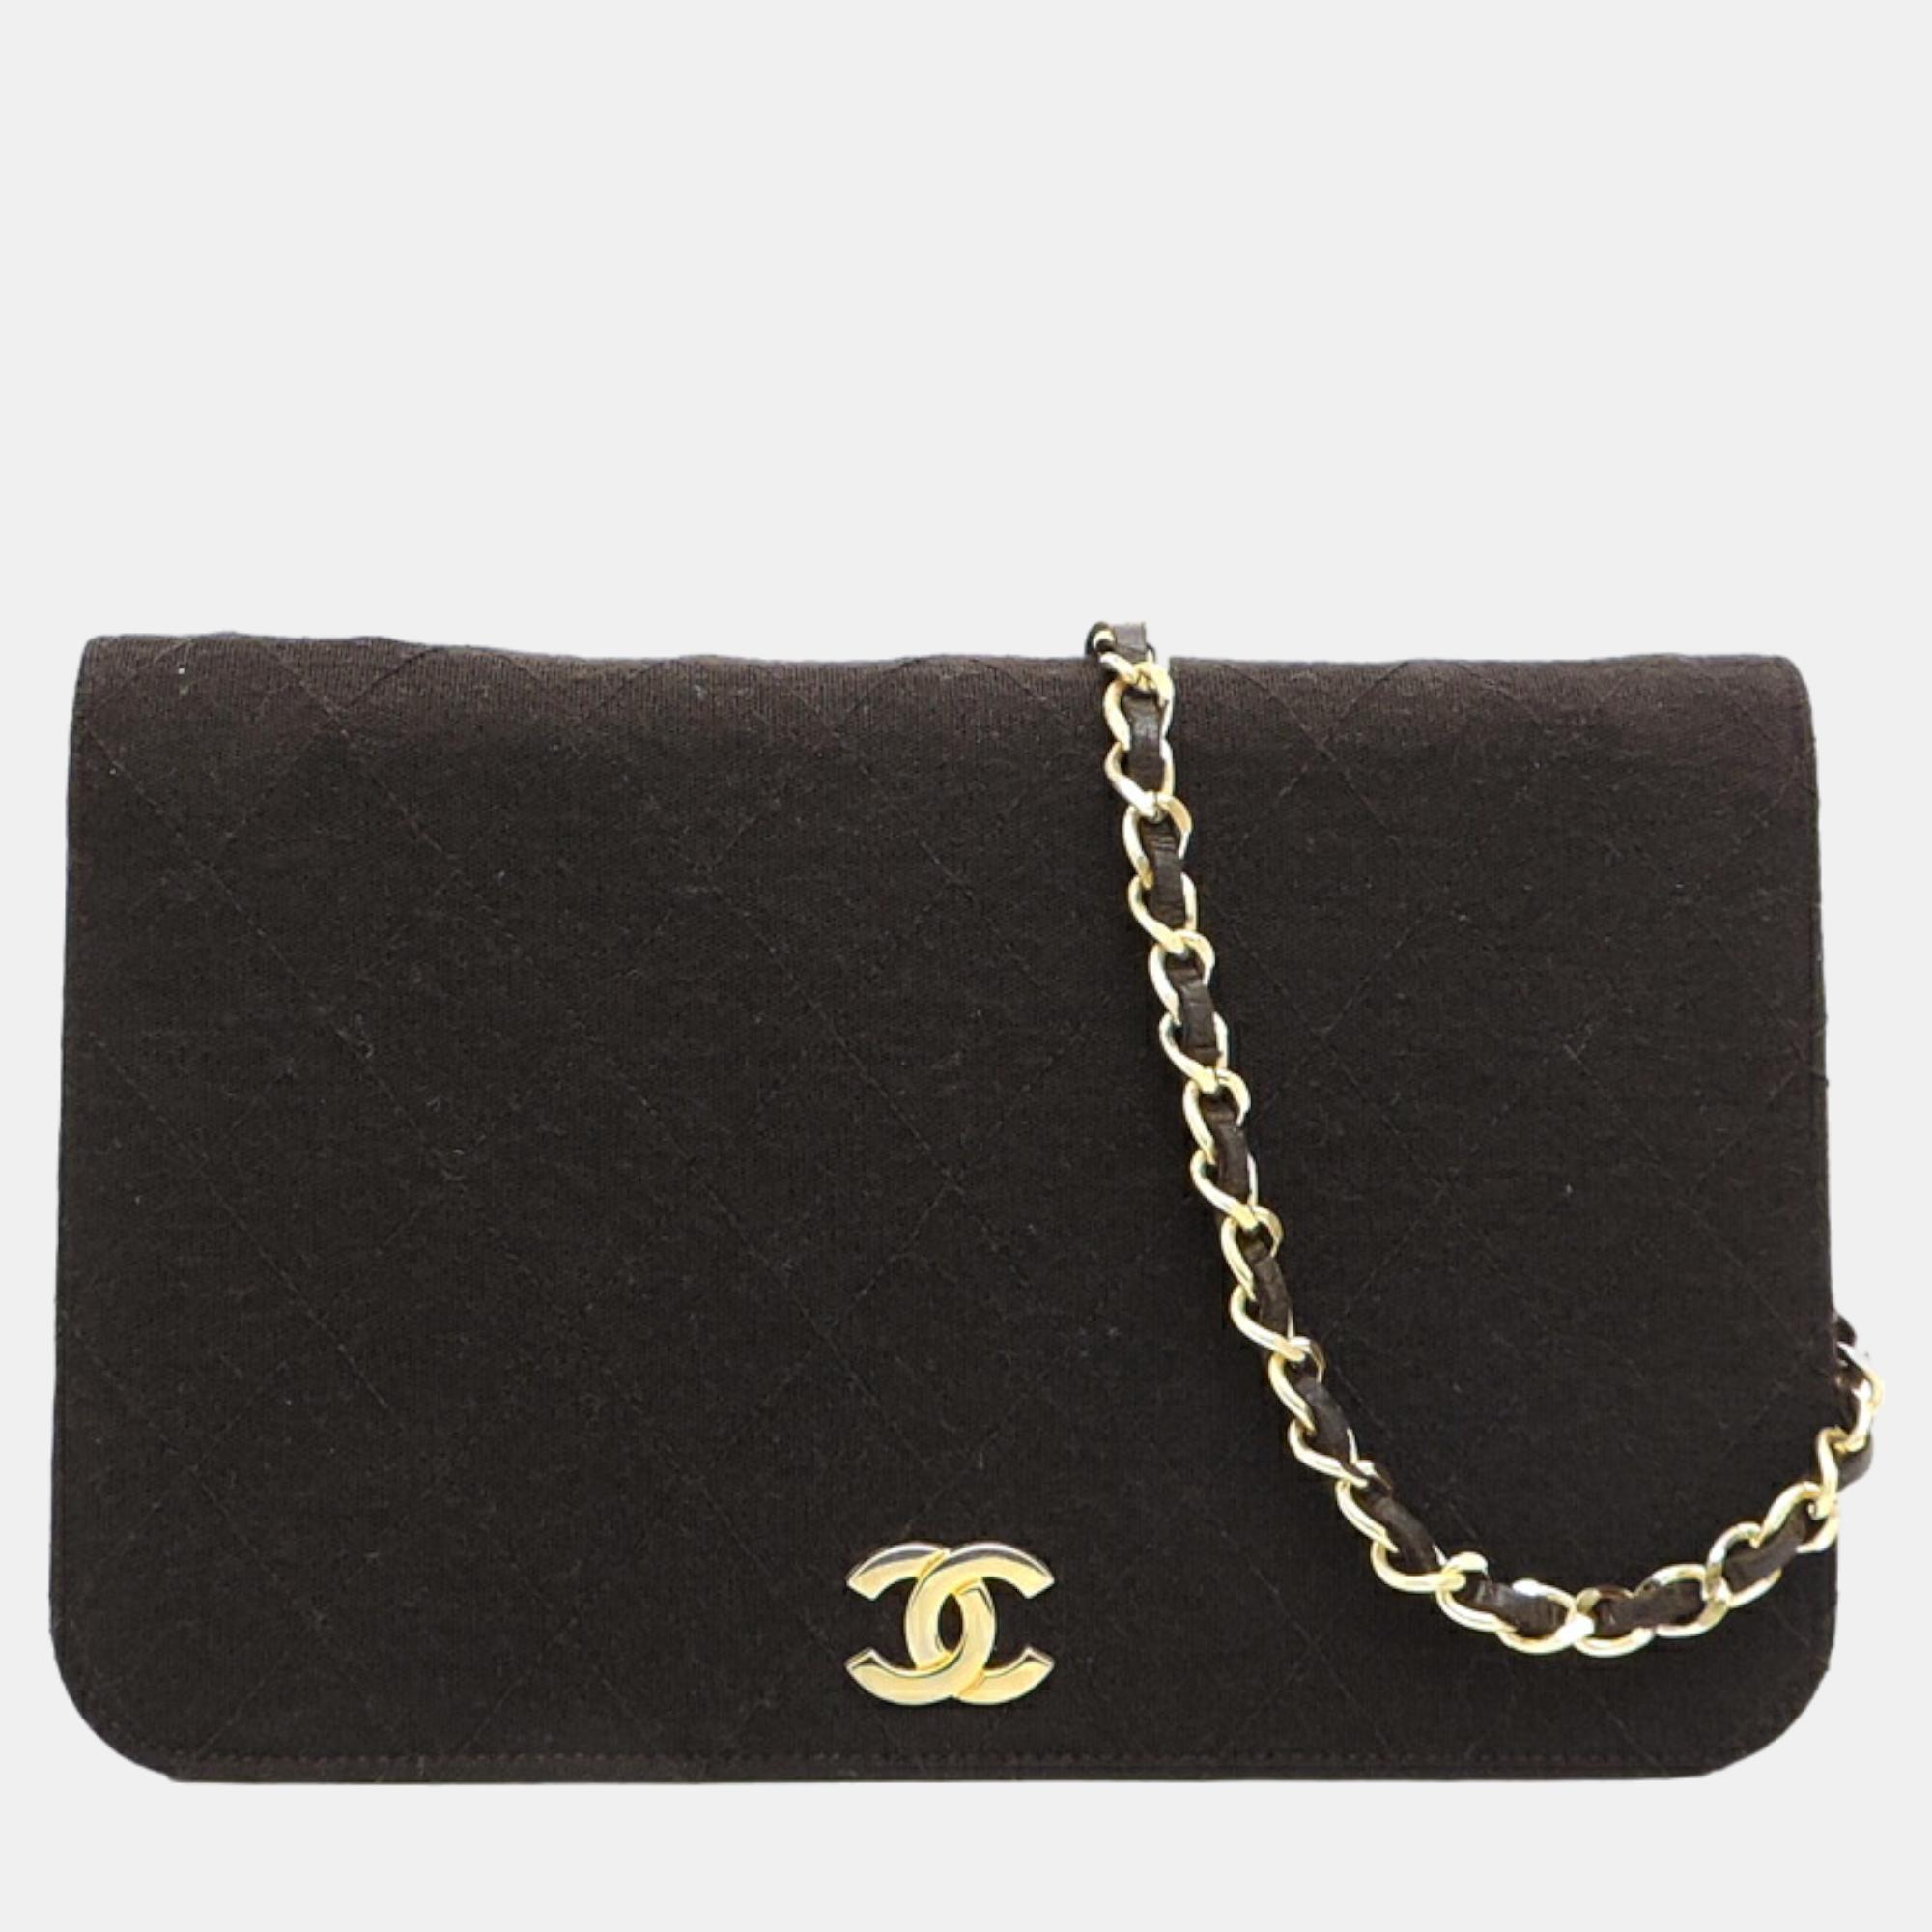 Chanel brown cotton cc single flap bag